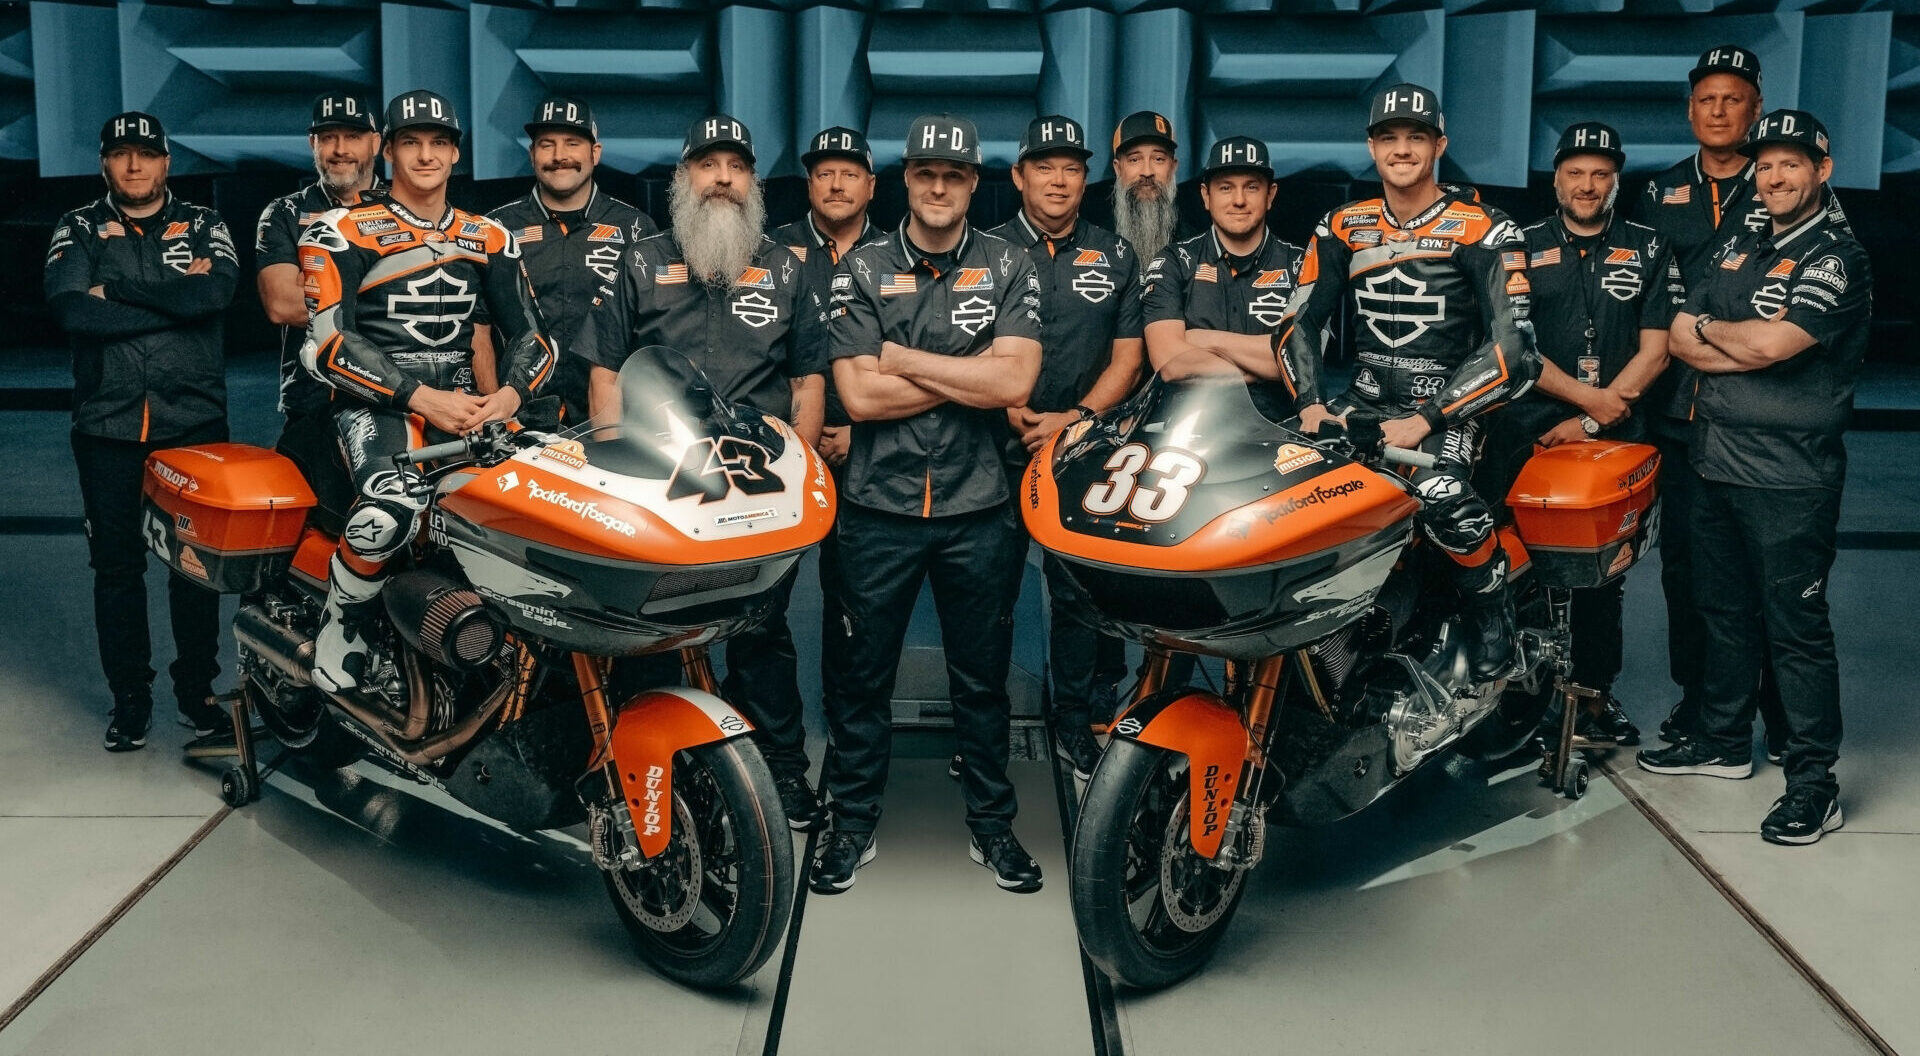 James Rispoli (43), Kyle Wyman (33), and the Harley-Davidson Factory Racing Team. Photo courtesy Harley-Davidson.